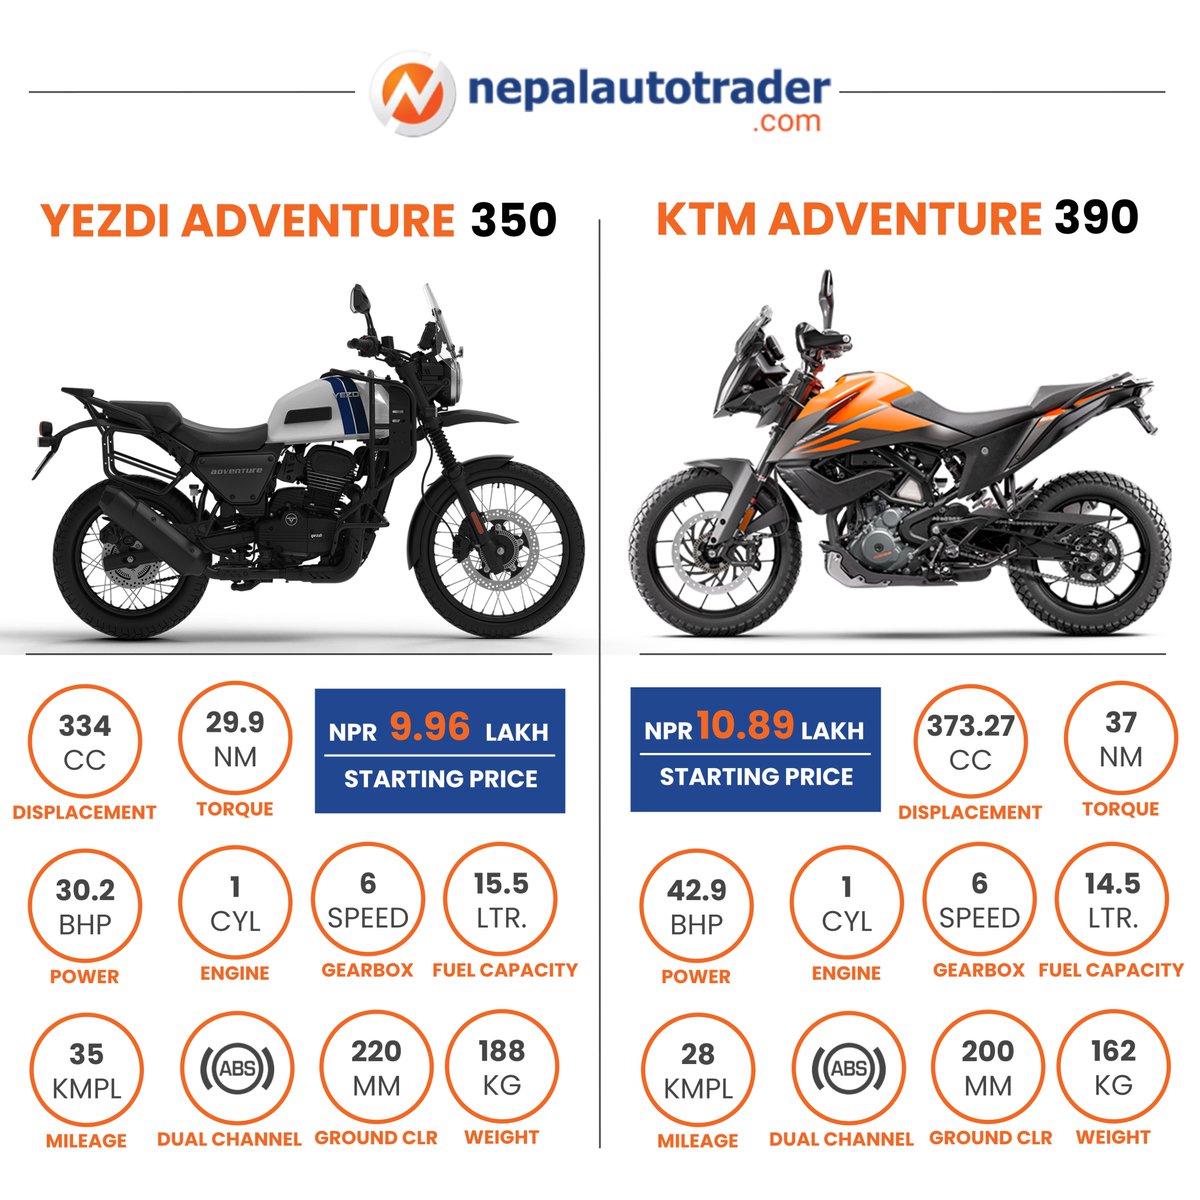 Here is a quick comparison between Yezdi Adventure and KTM 390 Adventure. #Autonews #AutonewsNepal #Bikes #BikesNepal #YezdiBikes #YezdiNepal #YezdiAdventure #YezdiAdventure350 #KTMBikes #KTMNepal #KTMAdventure #KTM390Adventure #Nepalautotrader